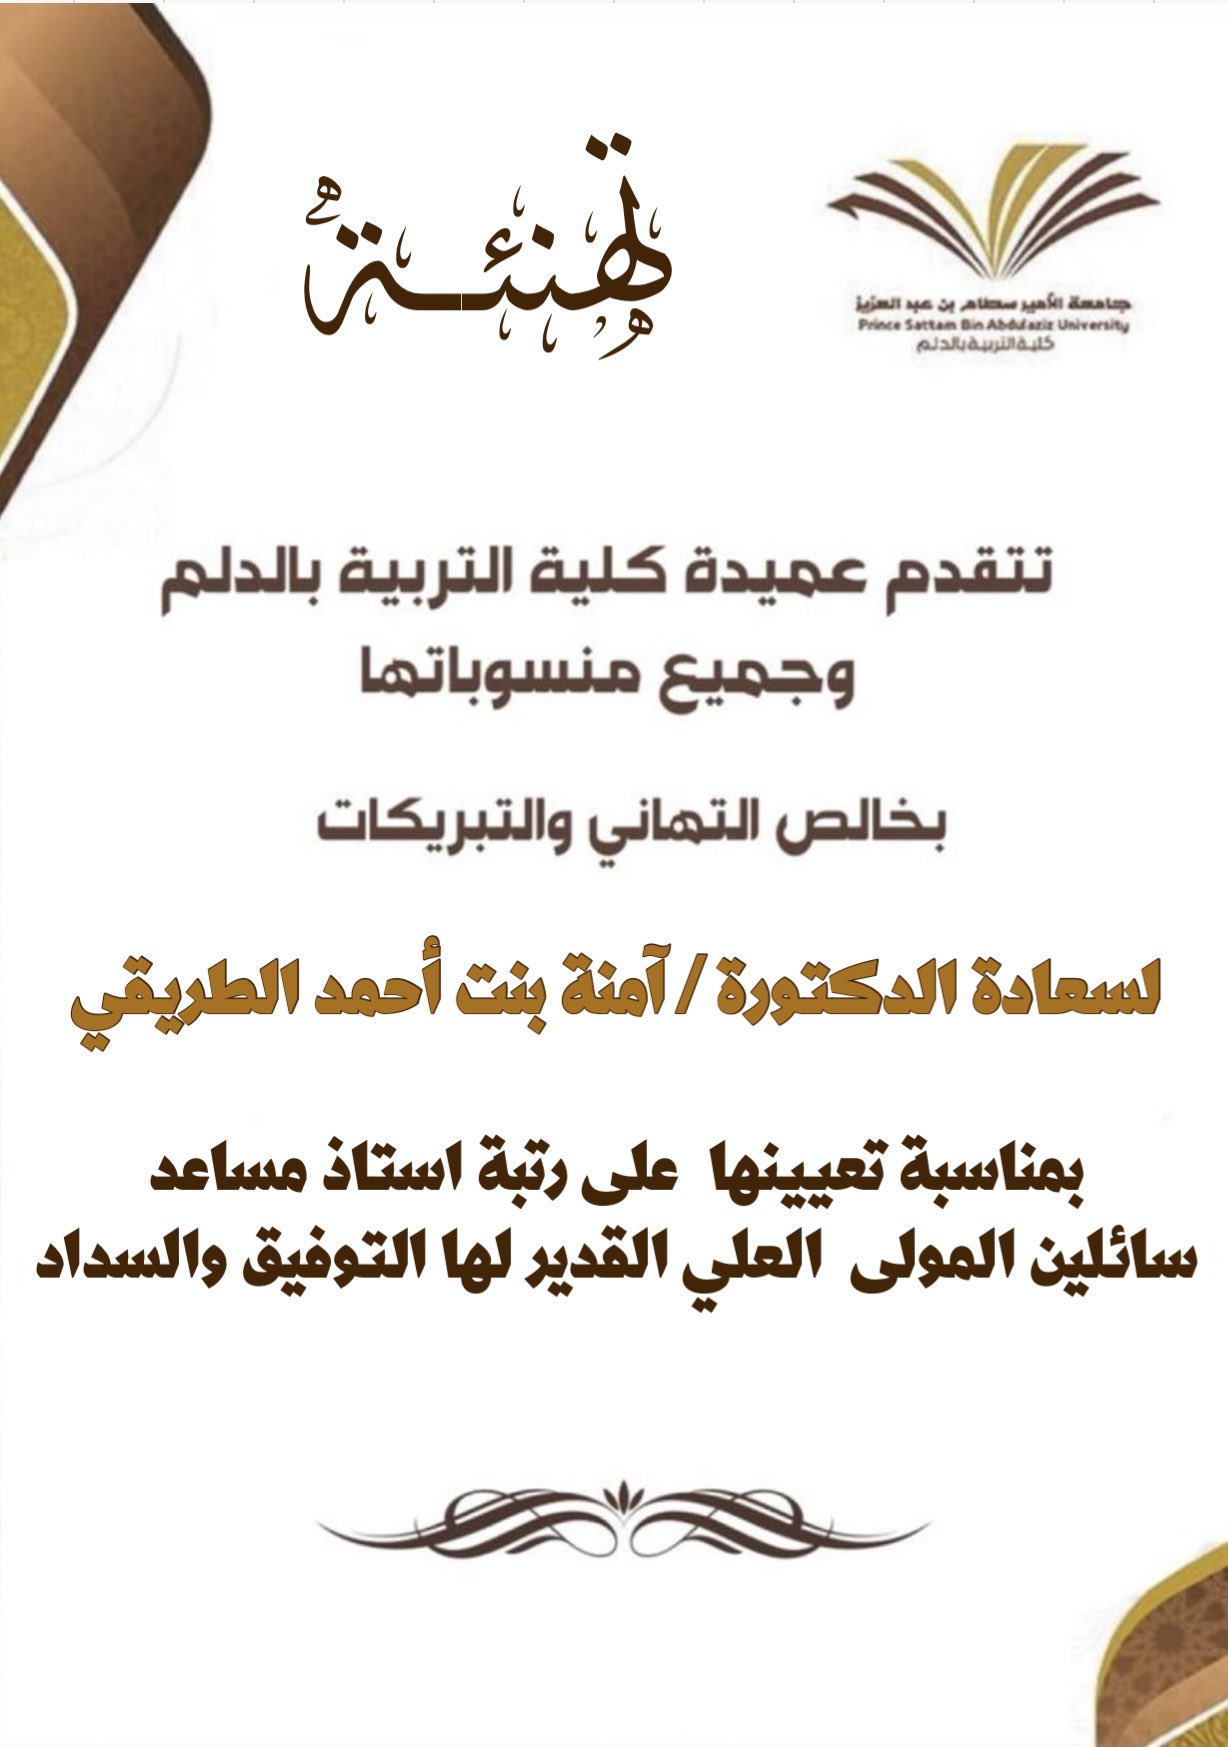 Congratulations to Dr. Amnah Ahmed Al-Toraiky